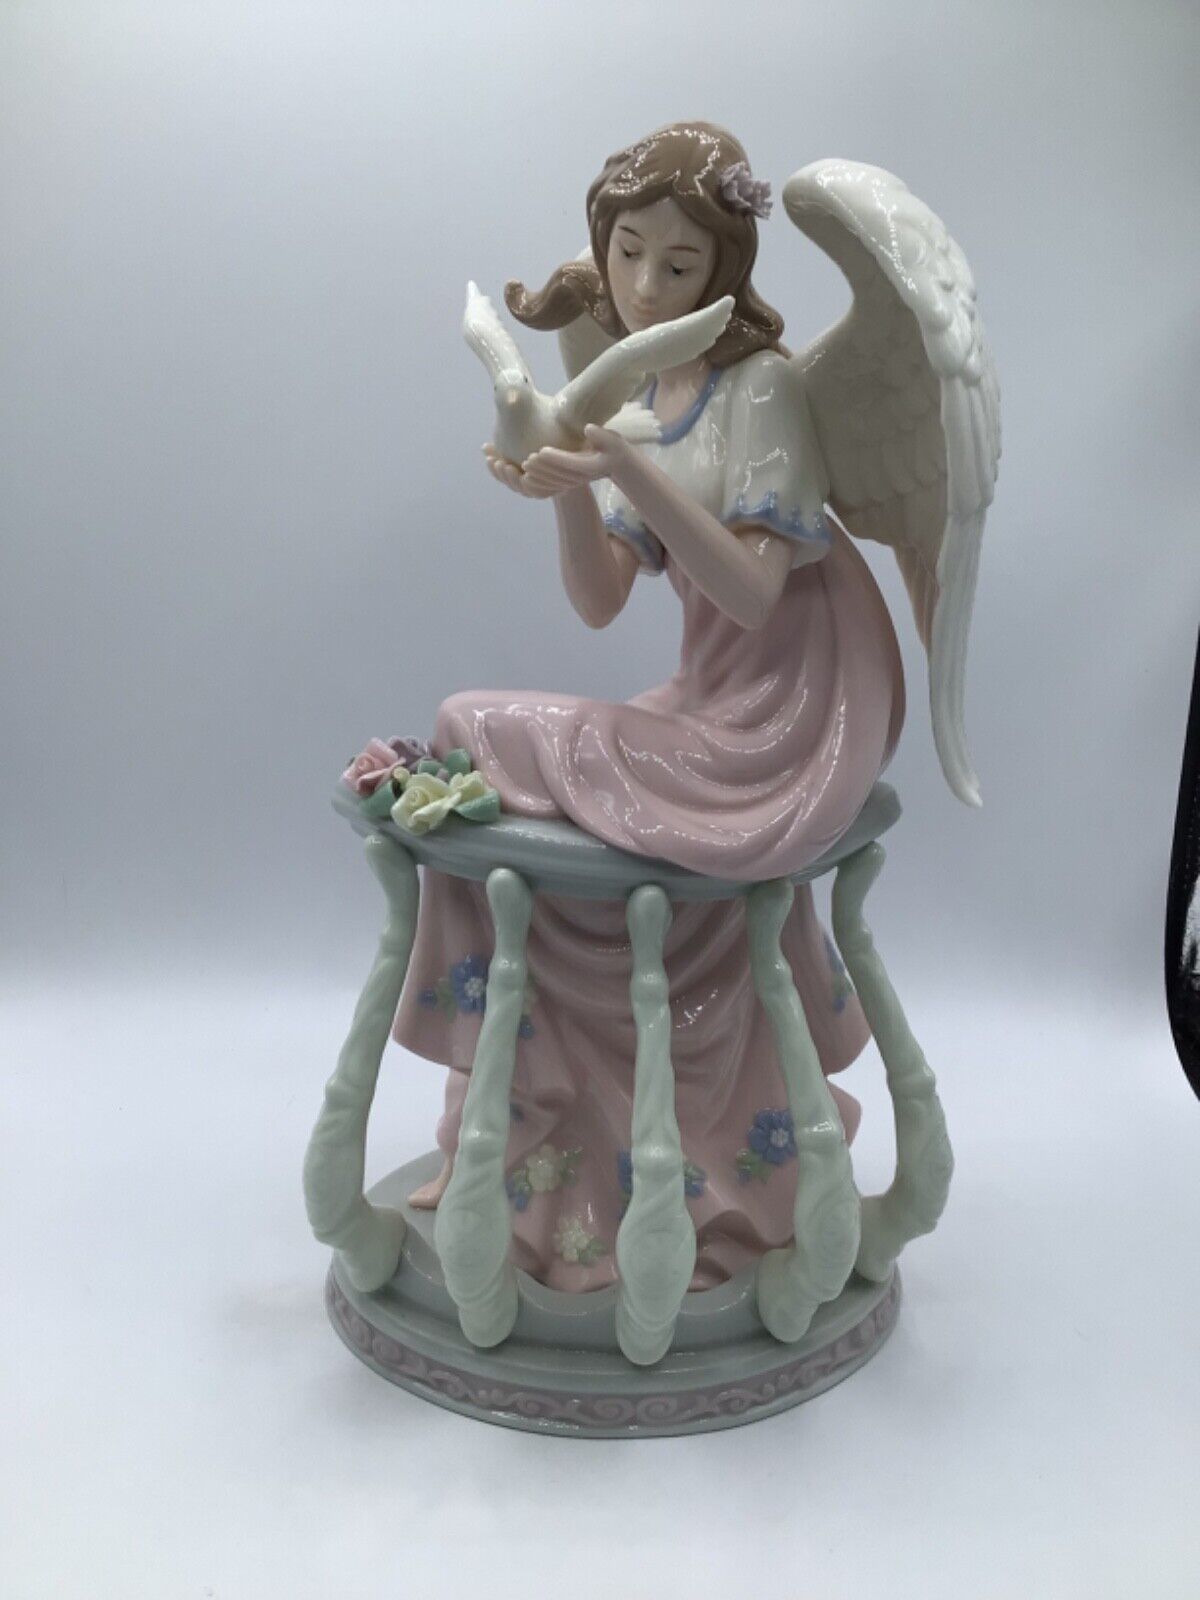 2006 Porcelain Hand Painted Angel Garden Rail Dove in Hand 12”Figurine